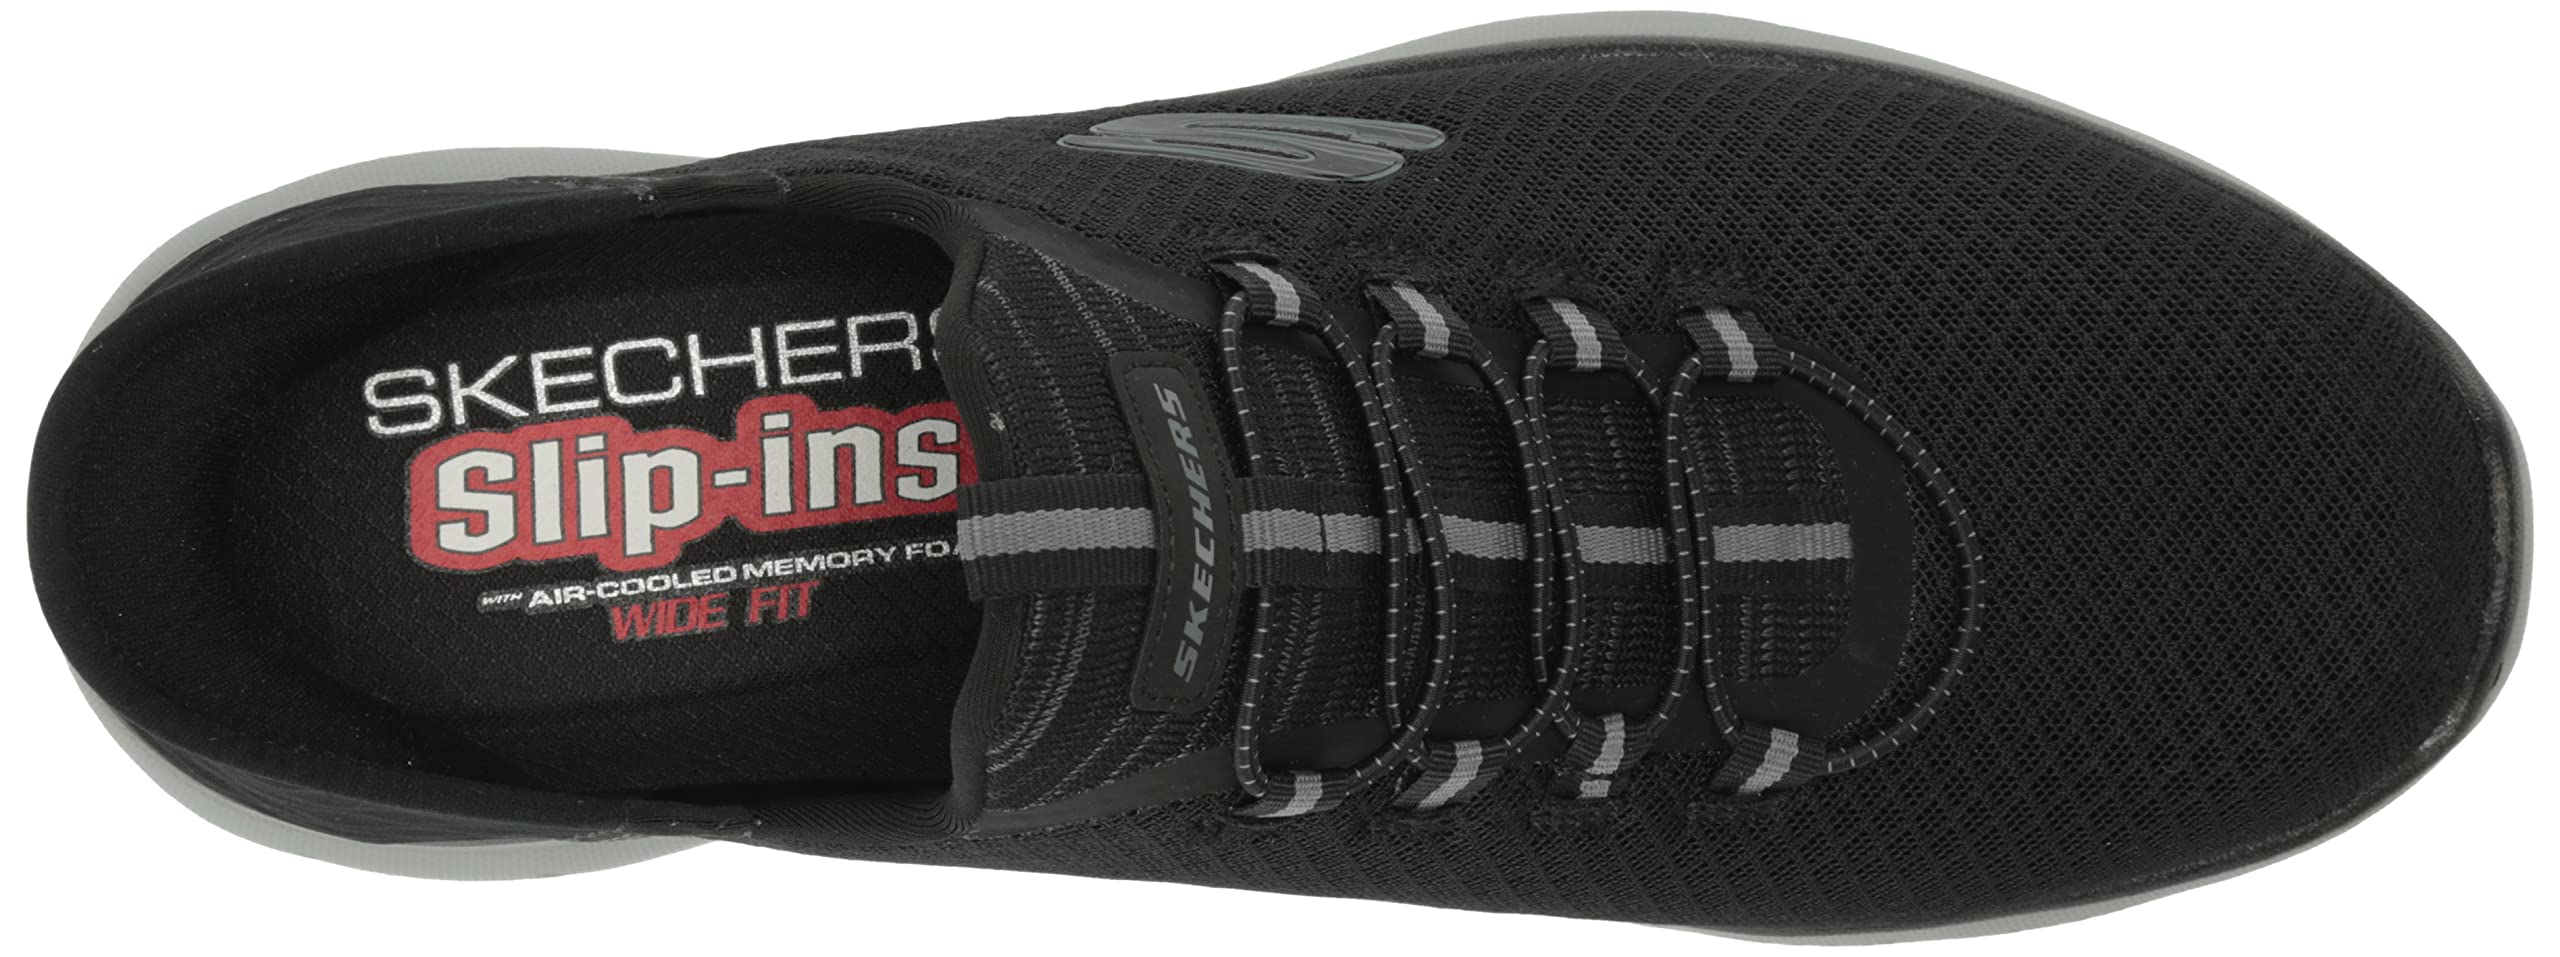 Skechers Men's Summits High Range Slip-in Loafer, Black/Charcoal, 13